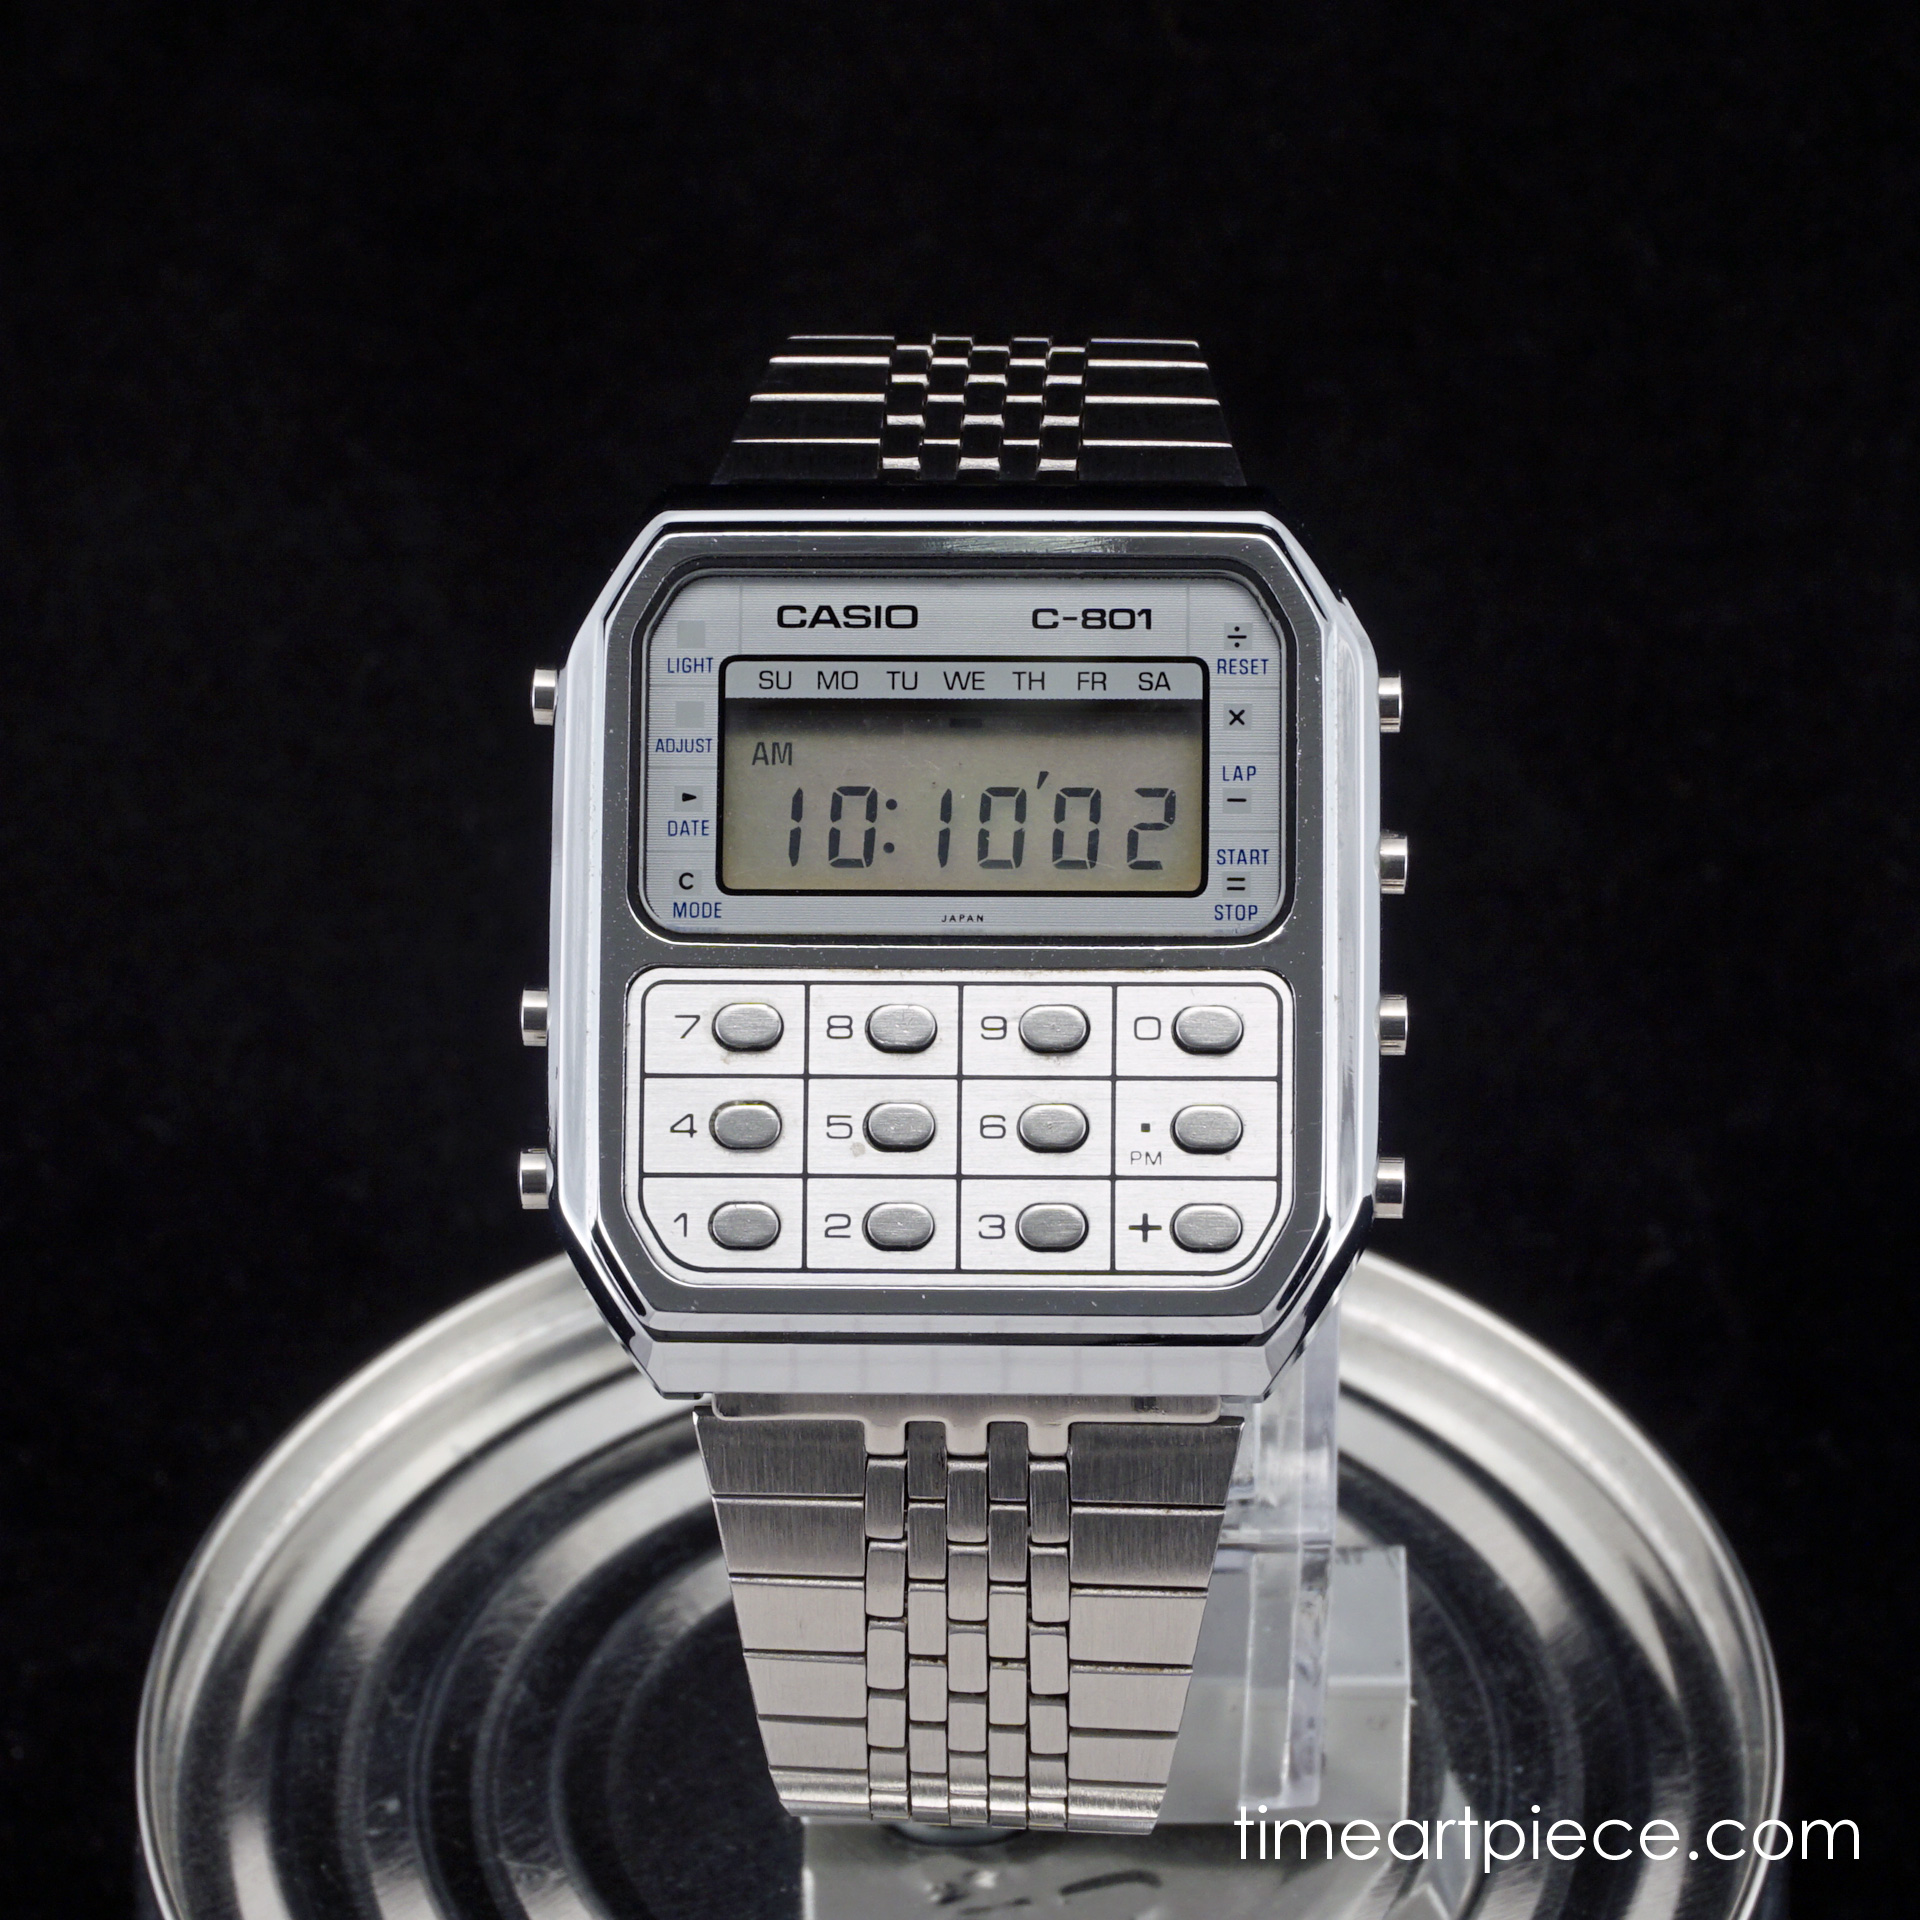 Casio C-801 Silver - Time Art Piece